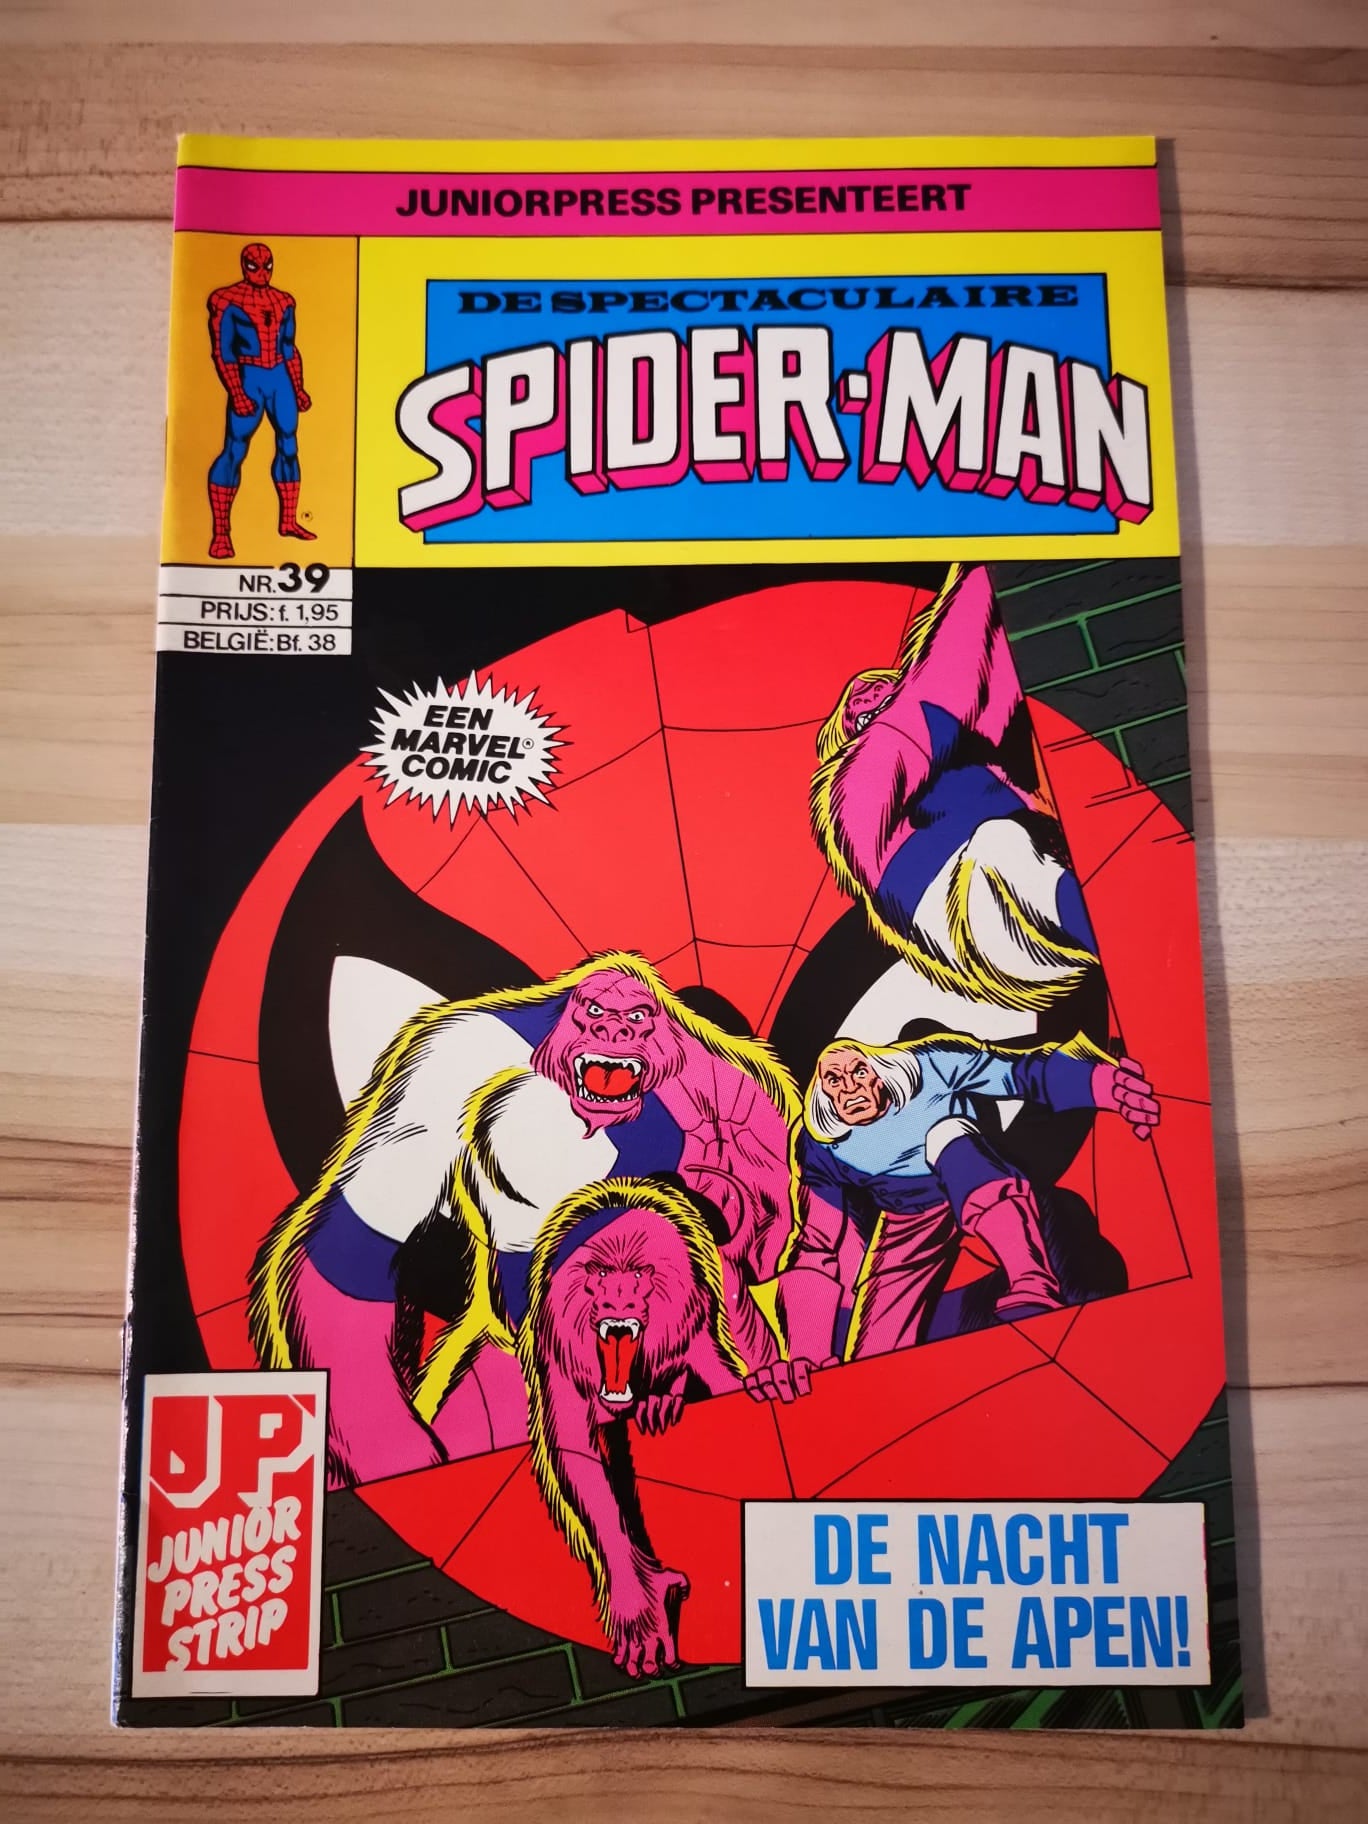 De spektakulaire spiderman #39